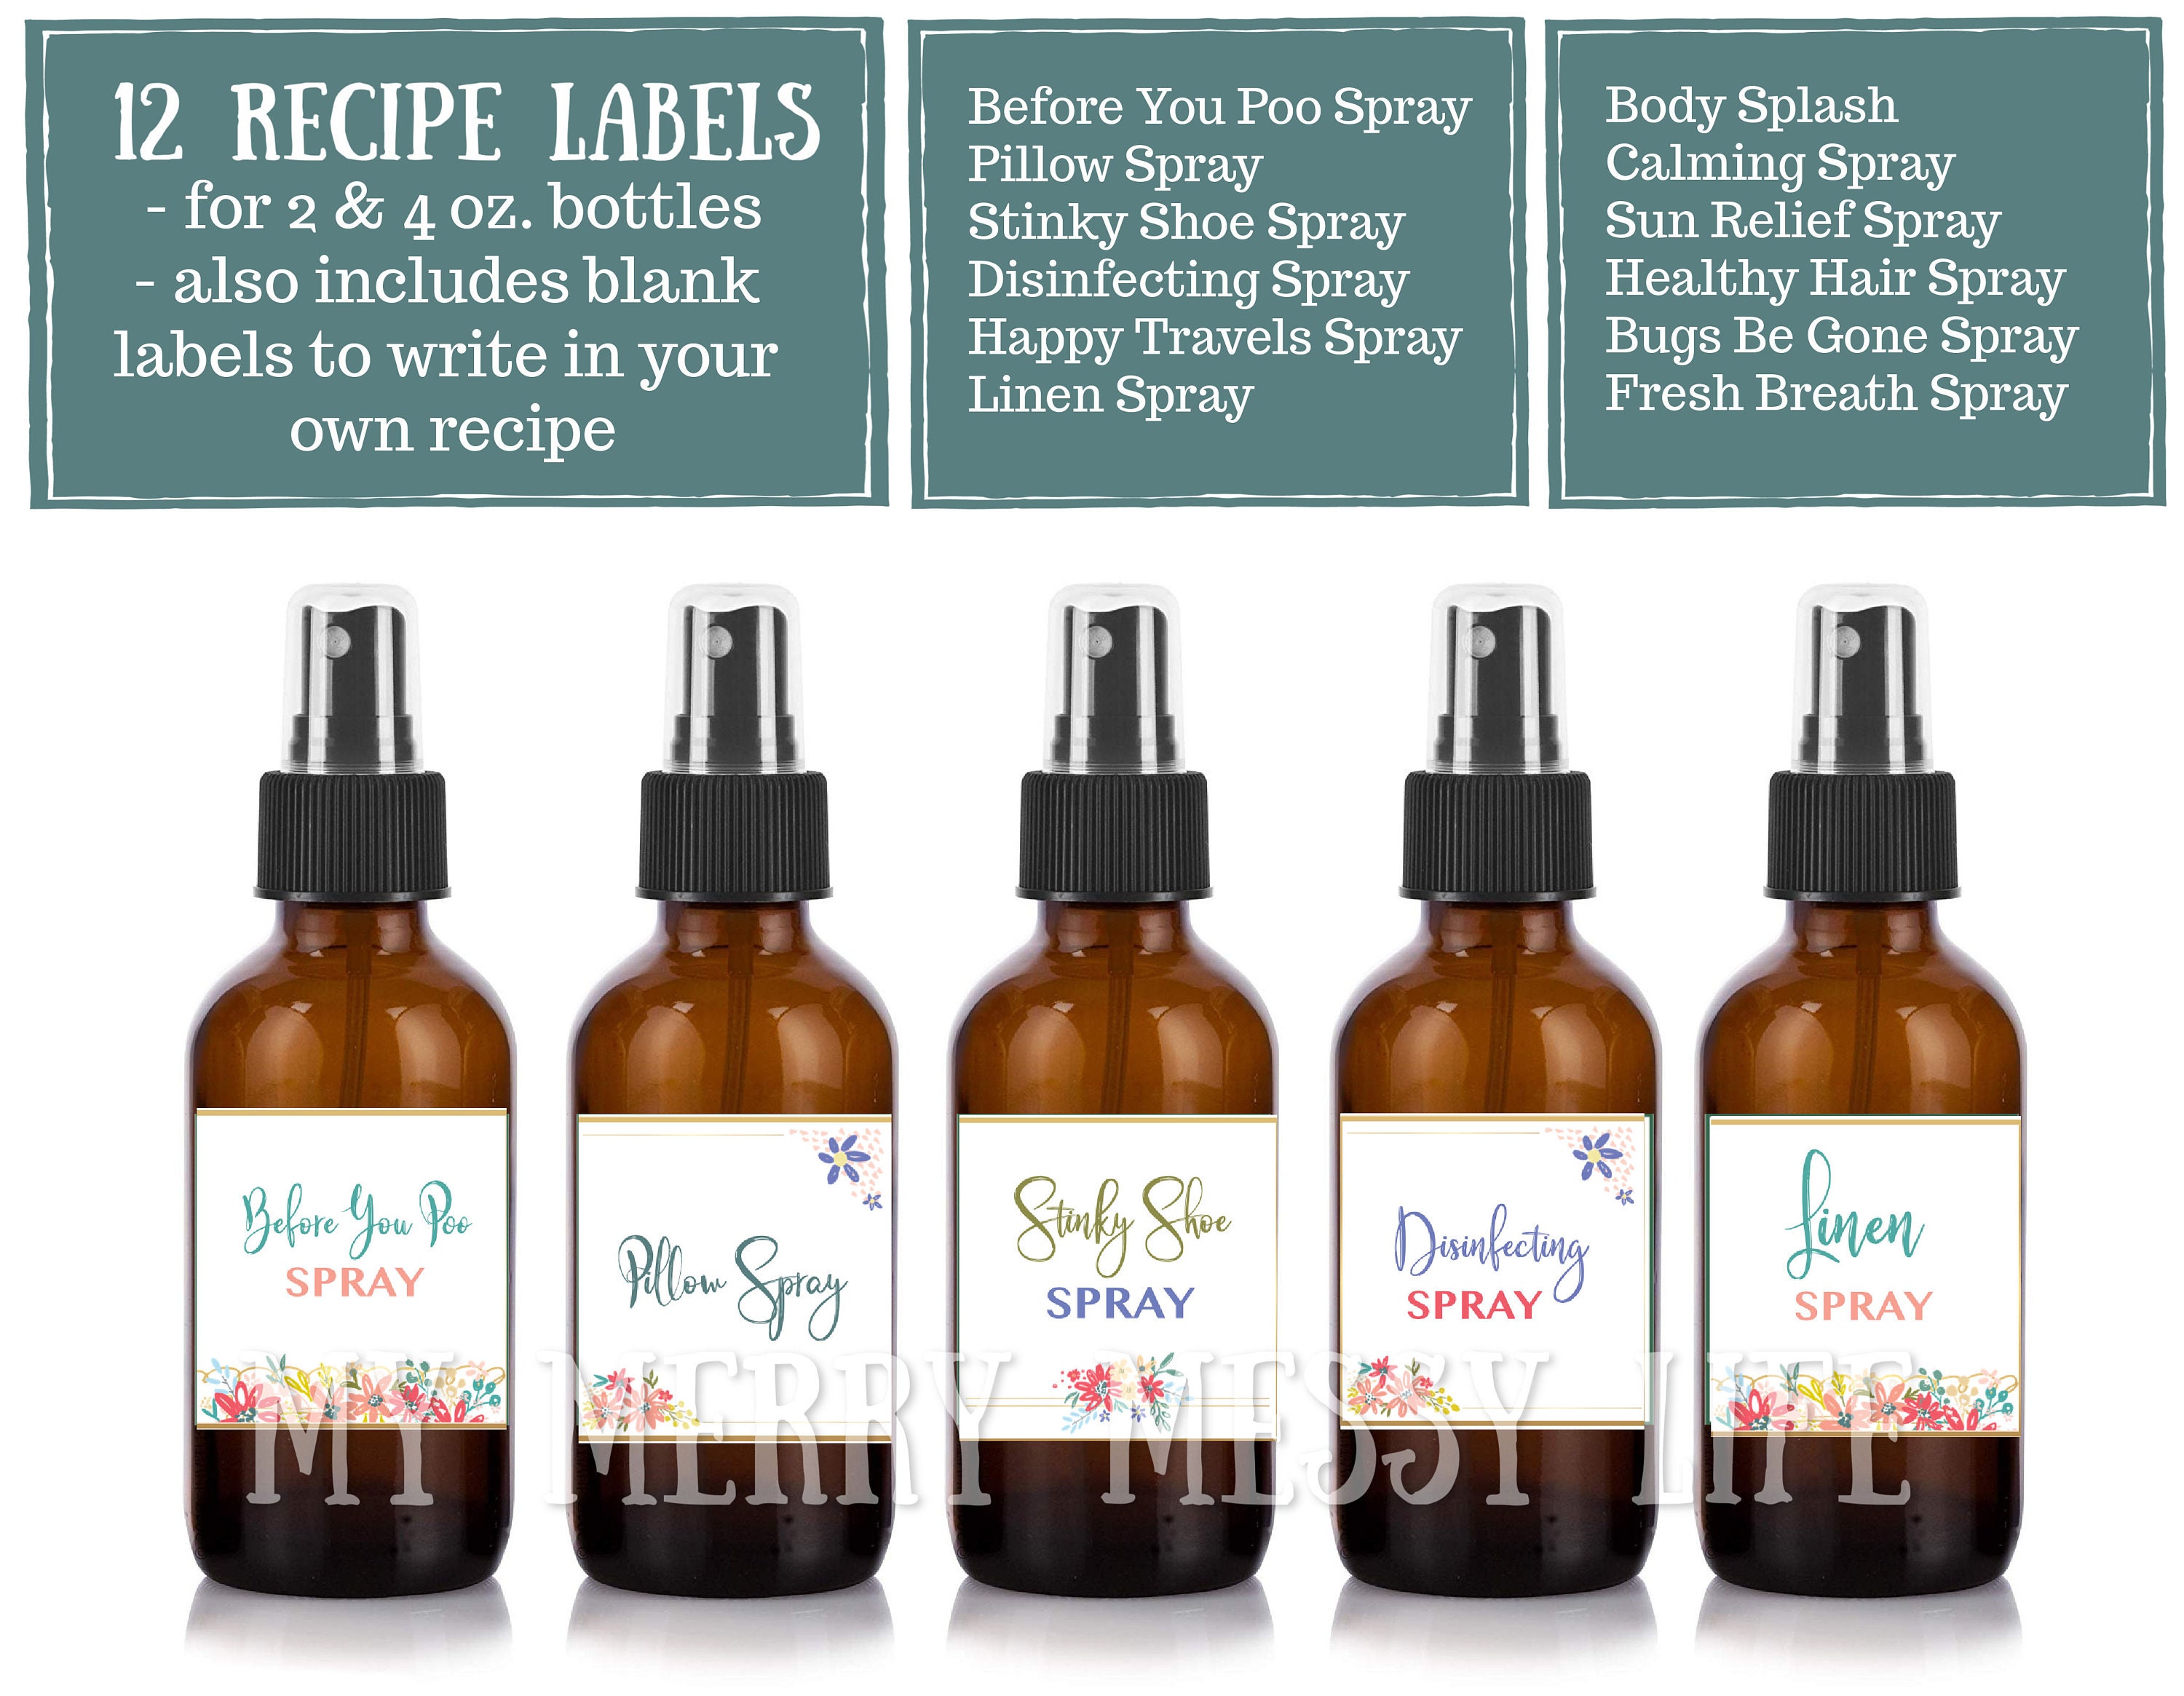 Easy Essential Oils Recipes & Labels DIY Kit (Bottles Included